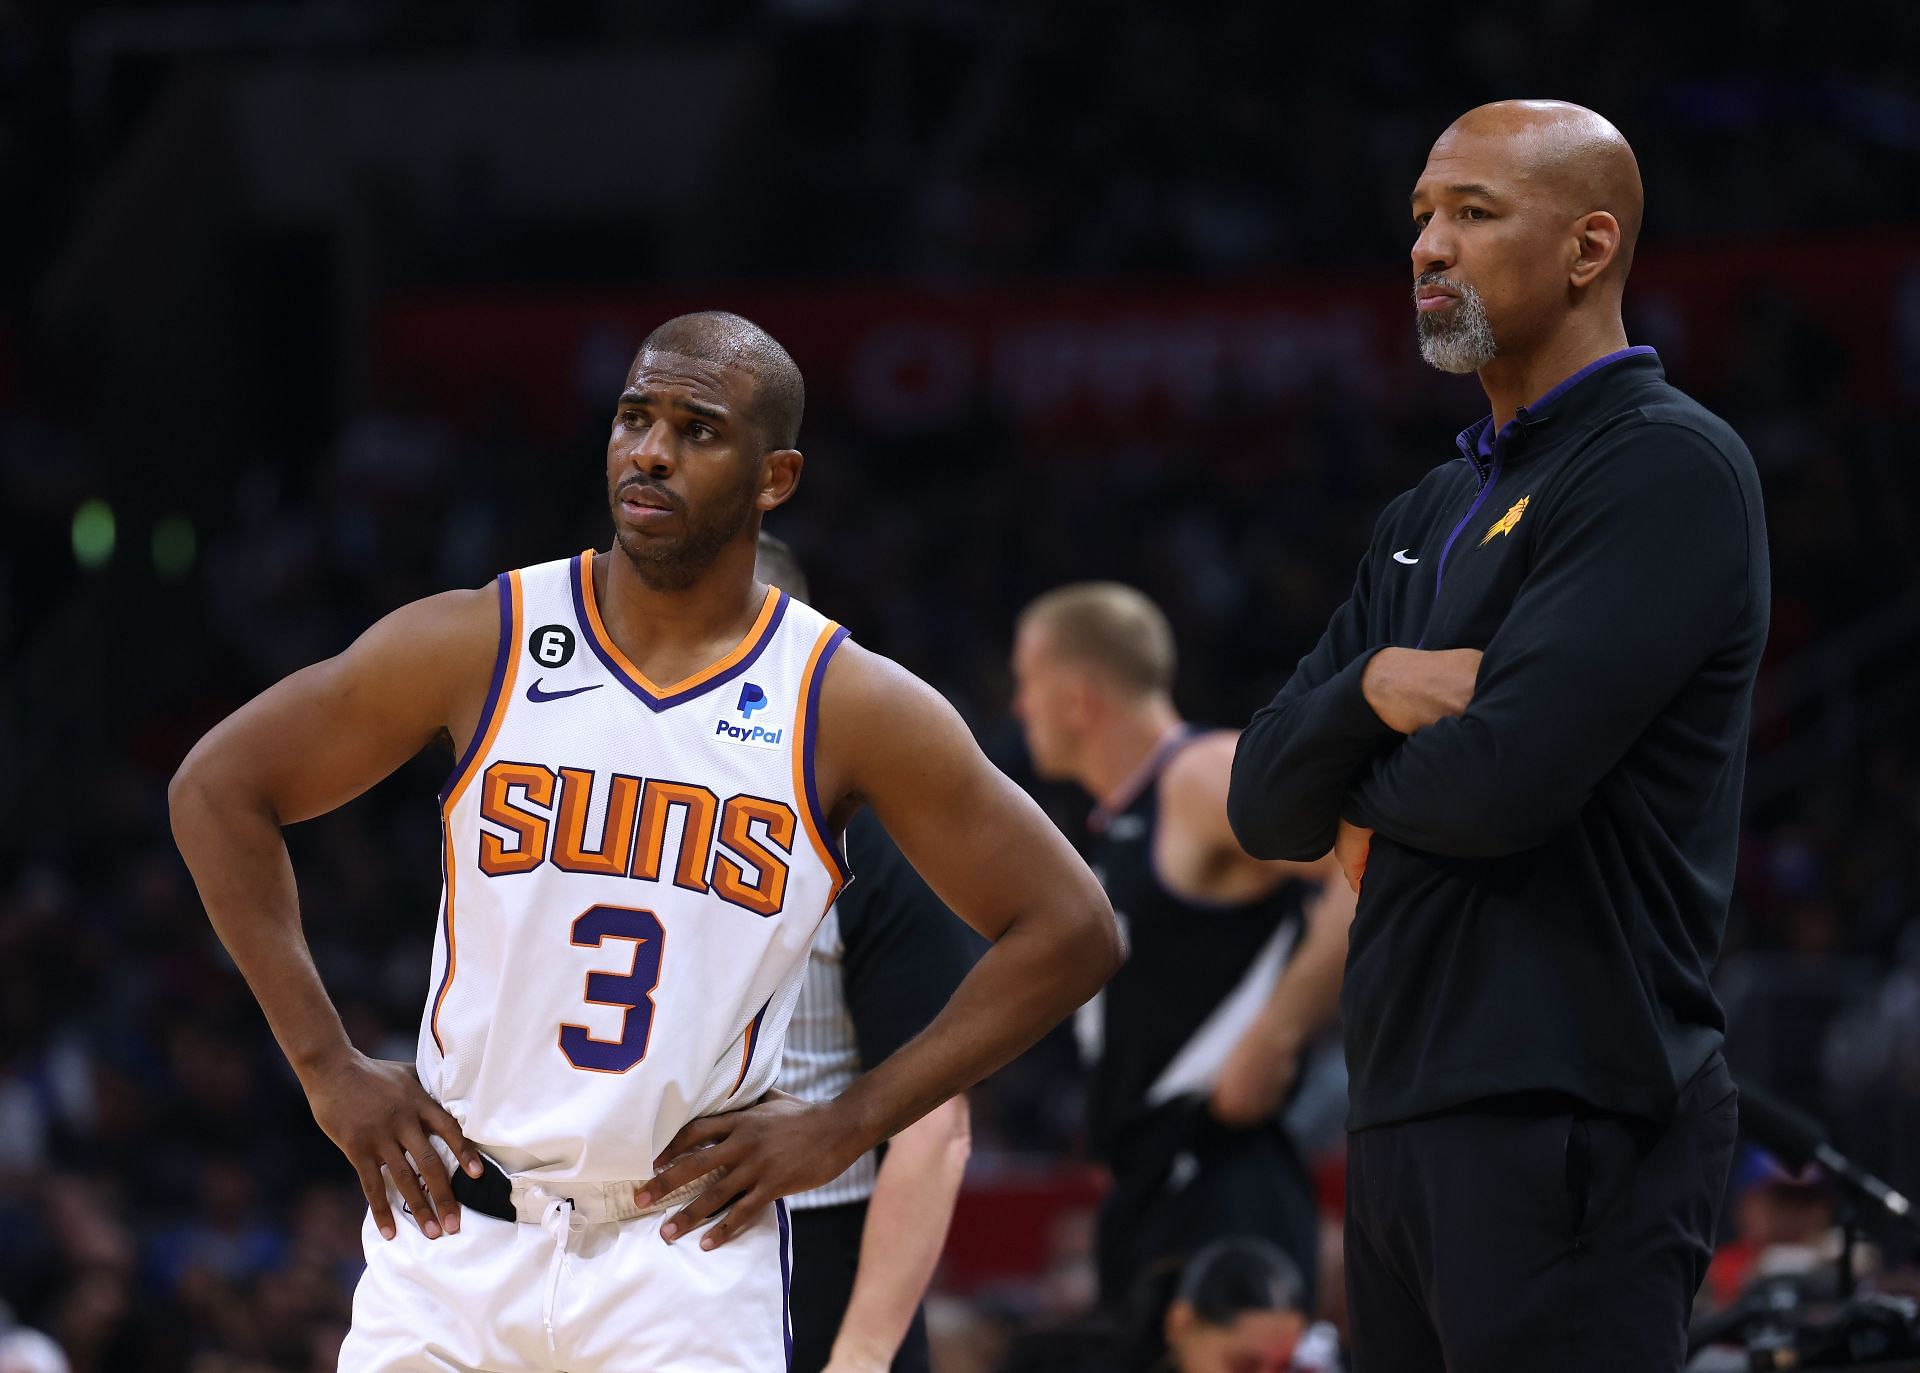 Phoenix Suns star point guard Chris Paul and Suns coach Monty Williams